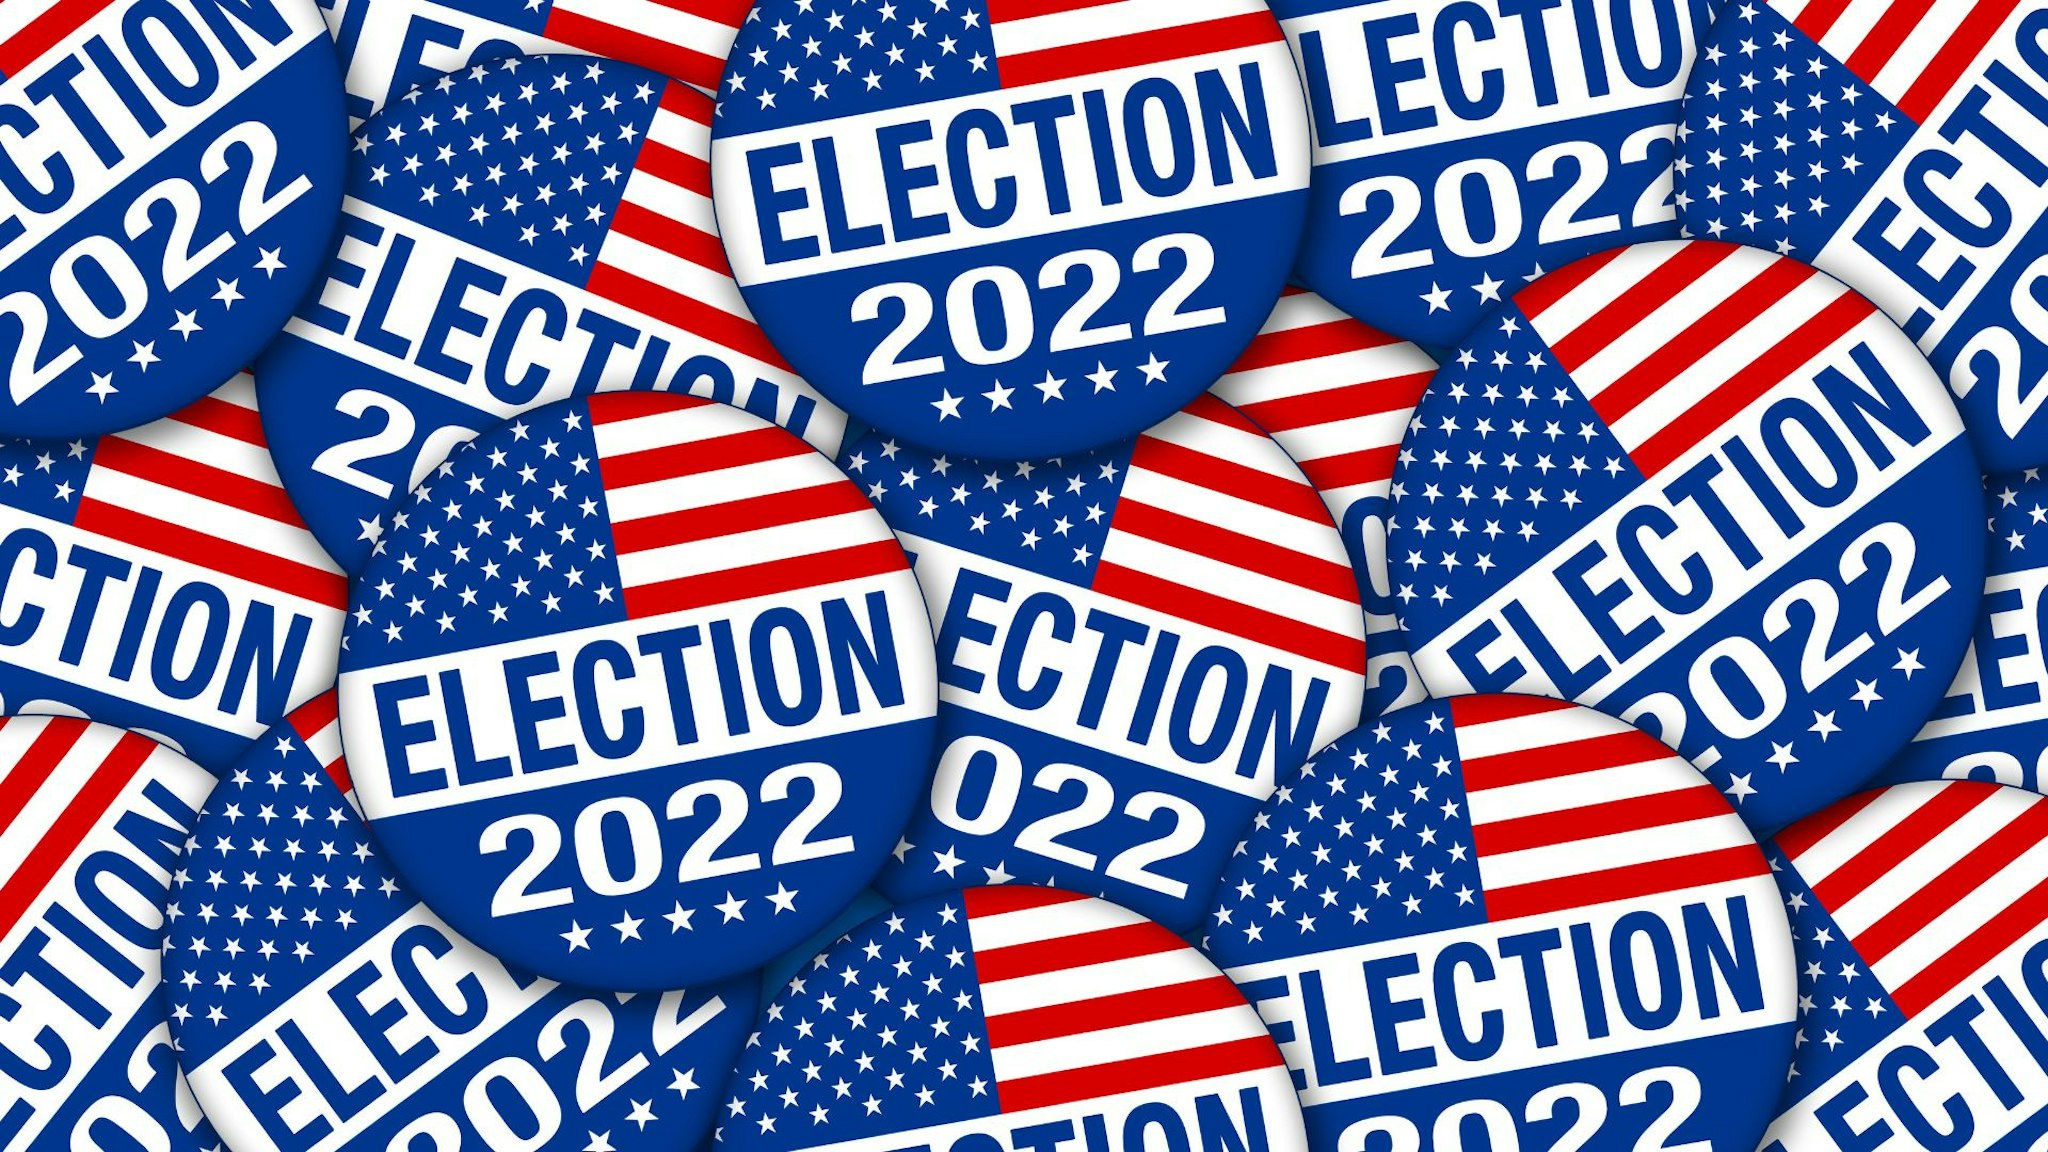 Election 22 stock image